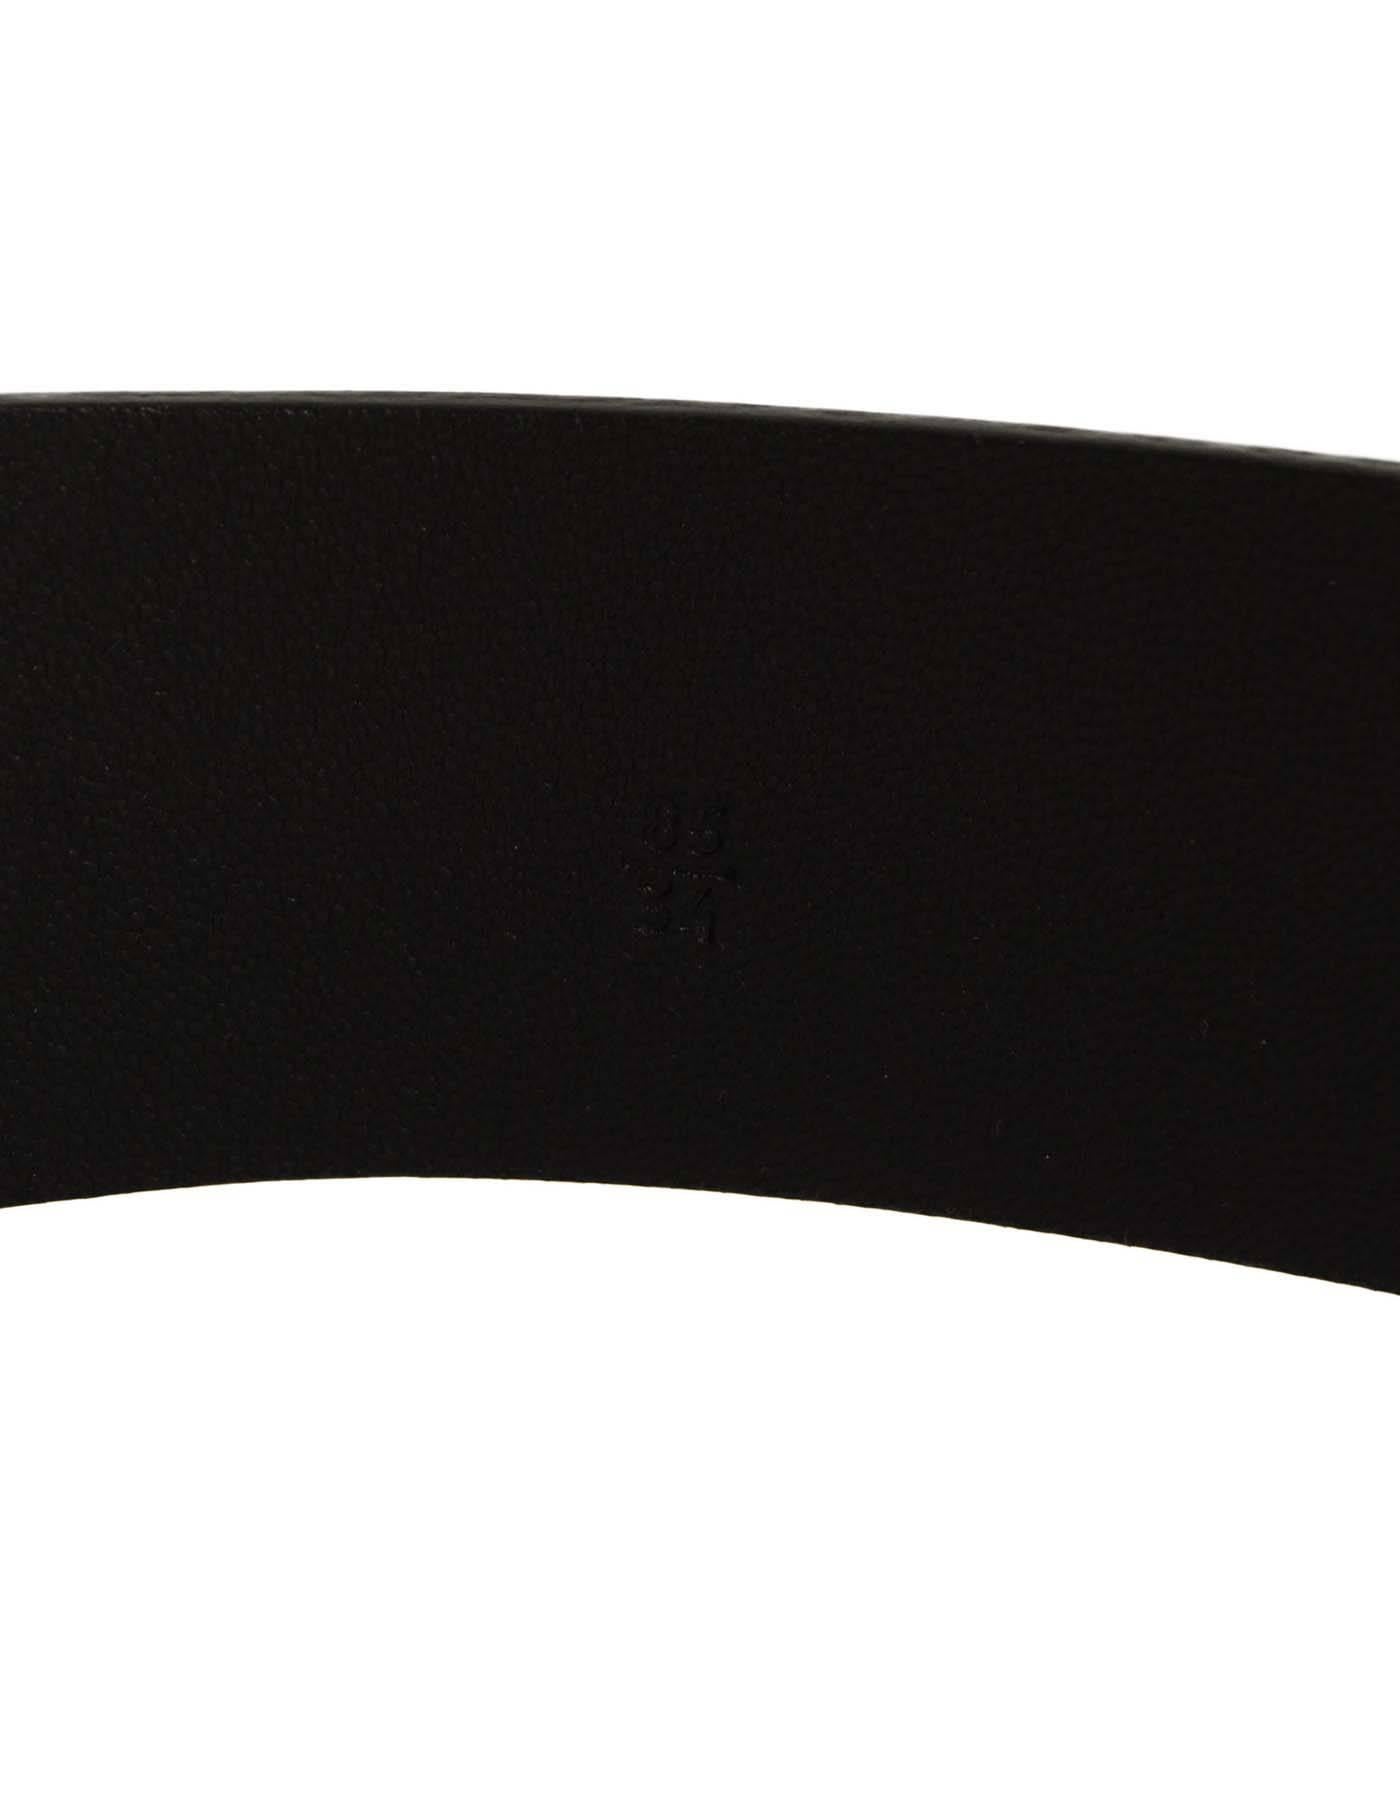 Women's Prada Black Leather Belt sz 85 SHW